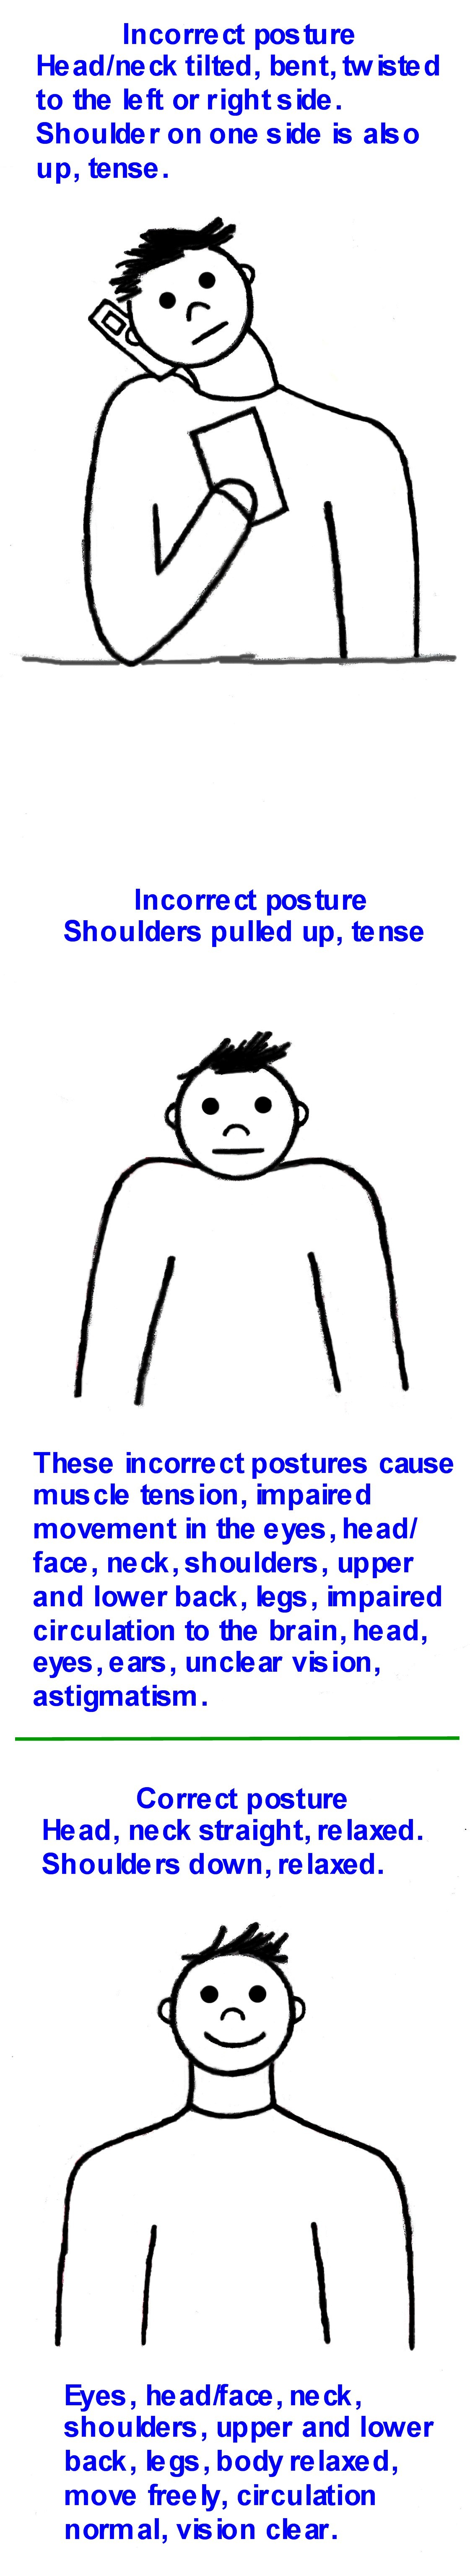 incorrect_and_correct_posture_001.jpg